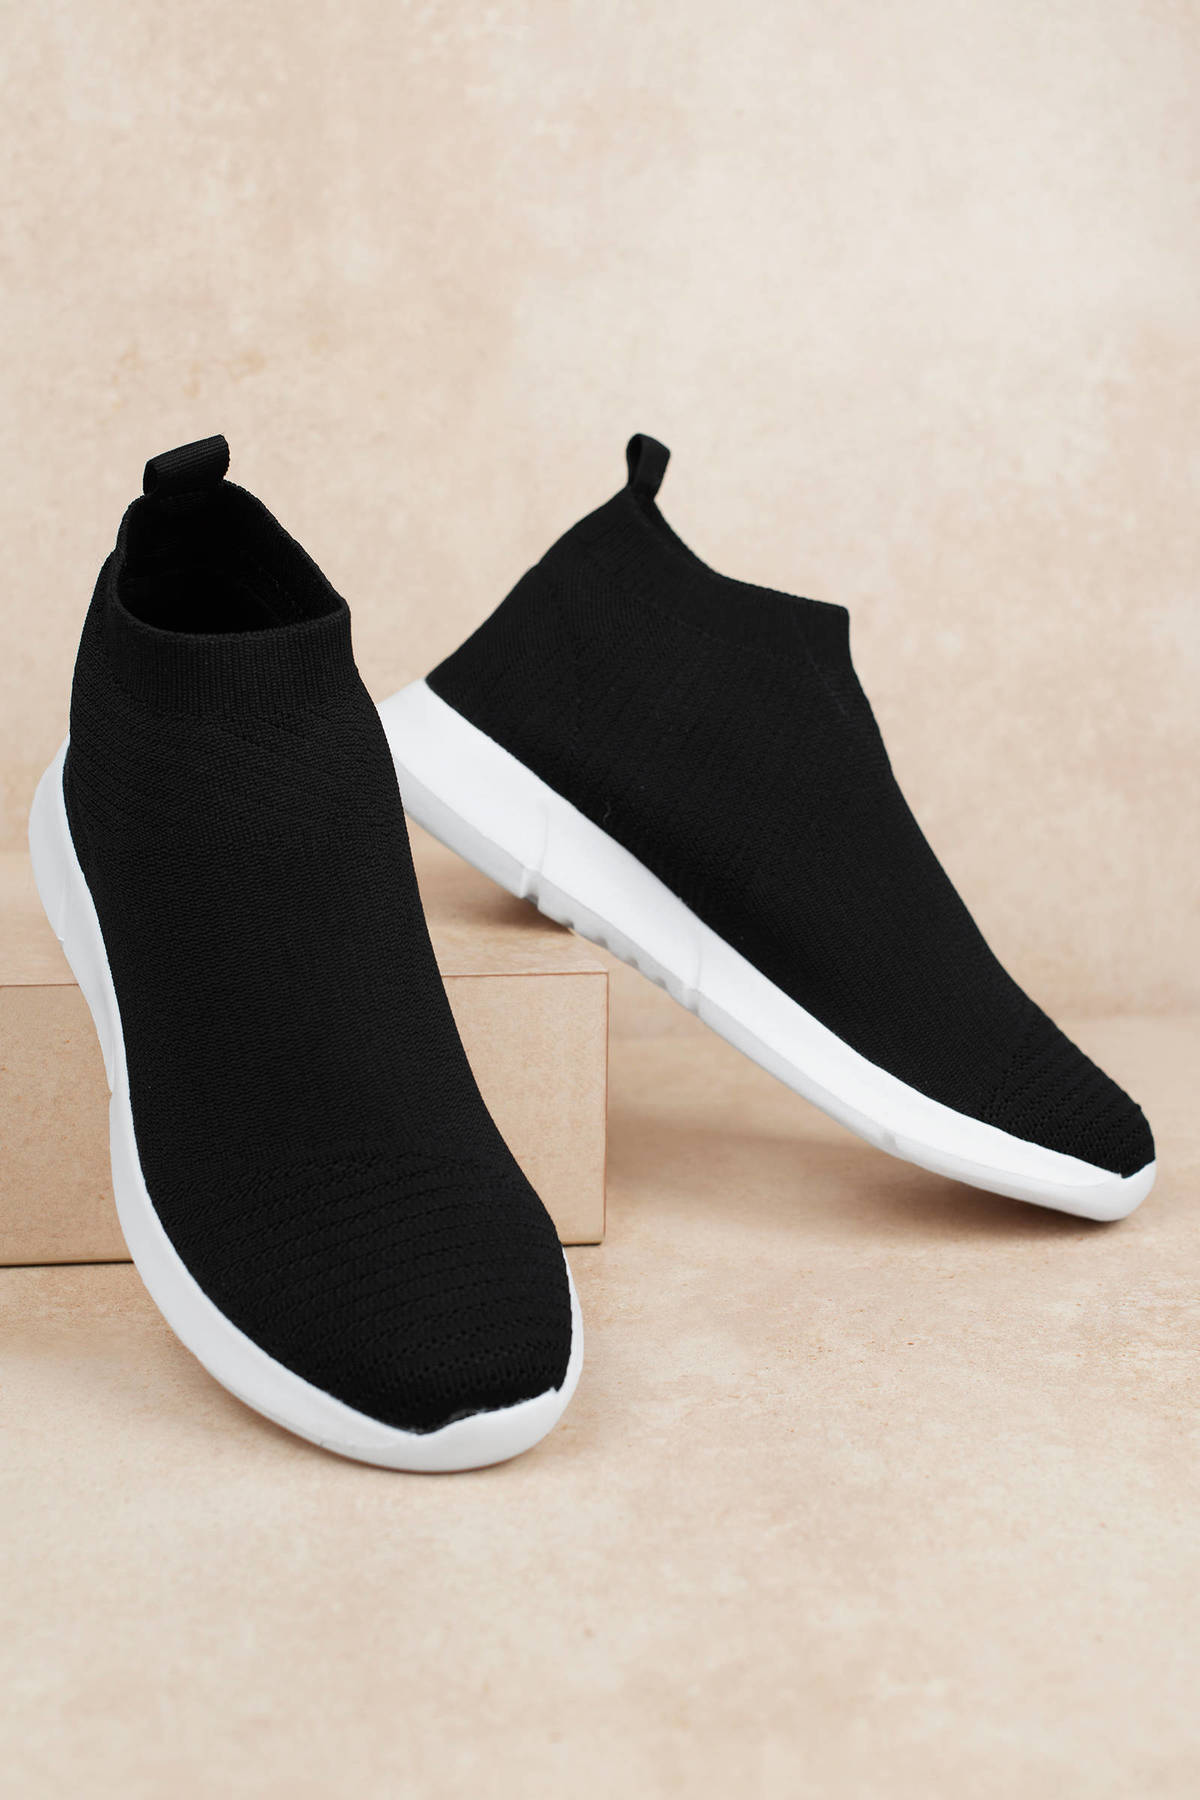 knit socks sneaker boot 23cmヒール高さ8cm - スニーカー